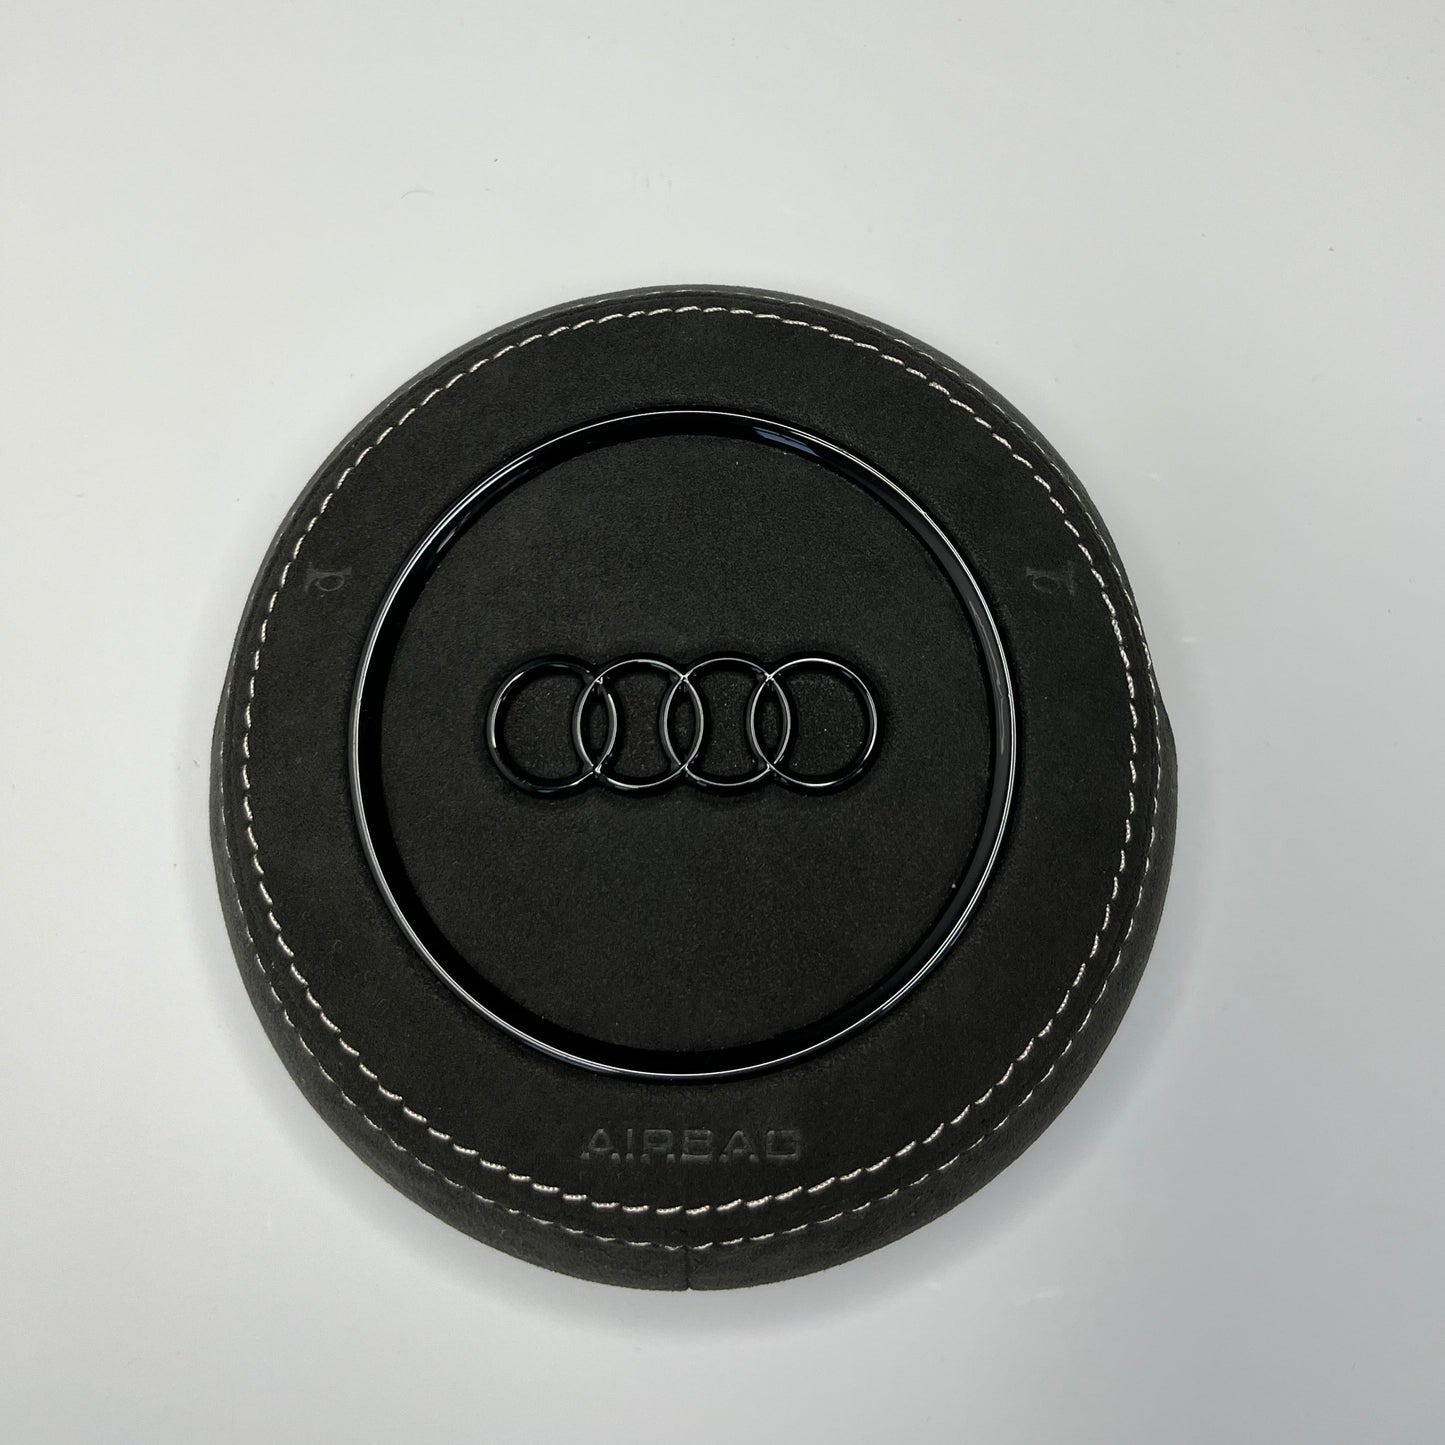 Audi seatbelt covers -  Österreich